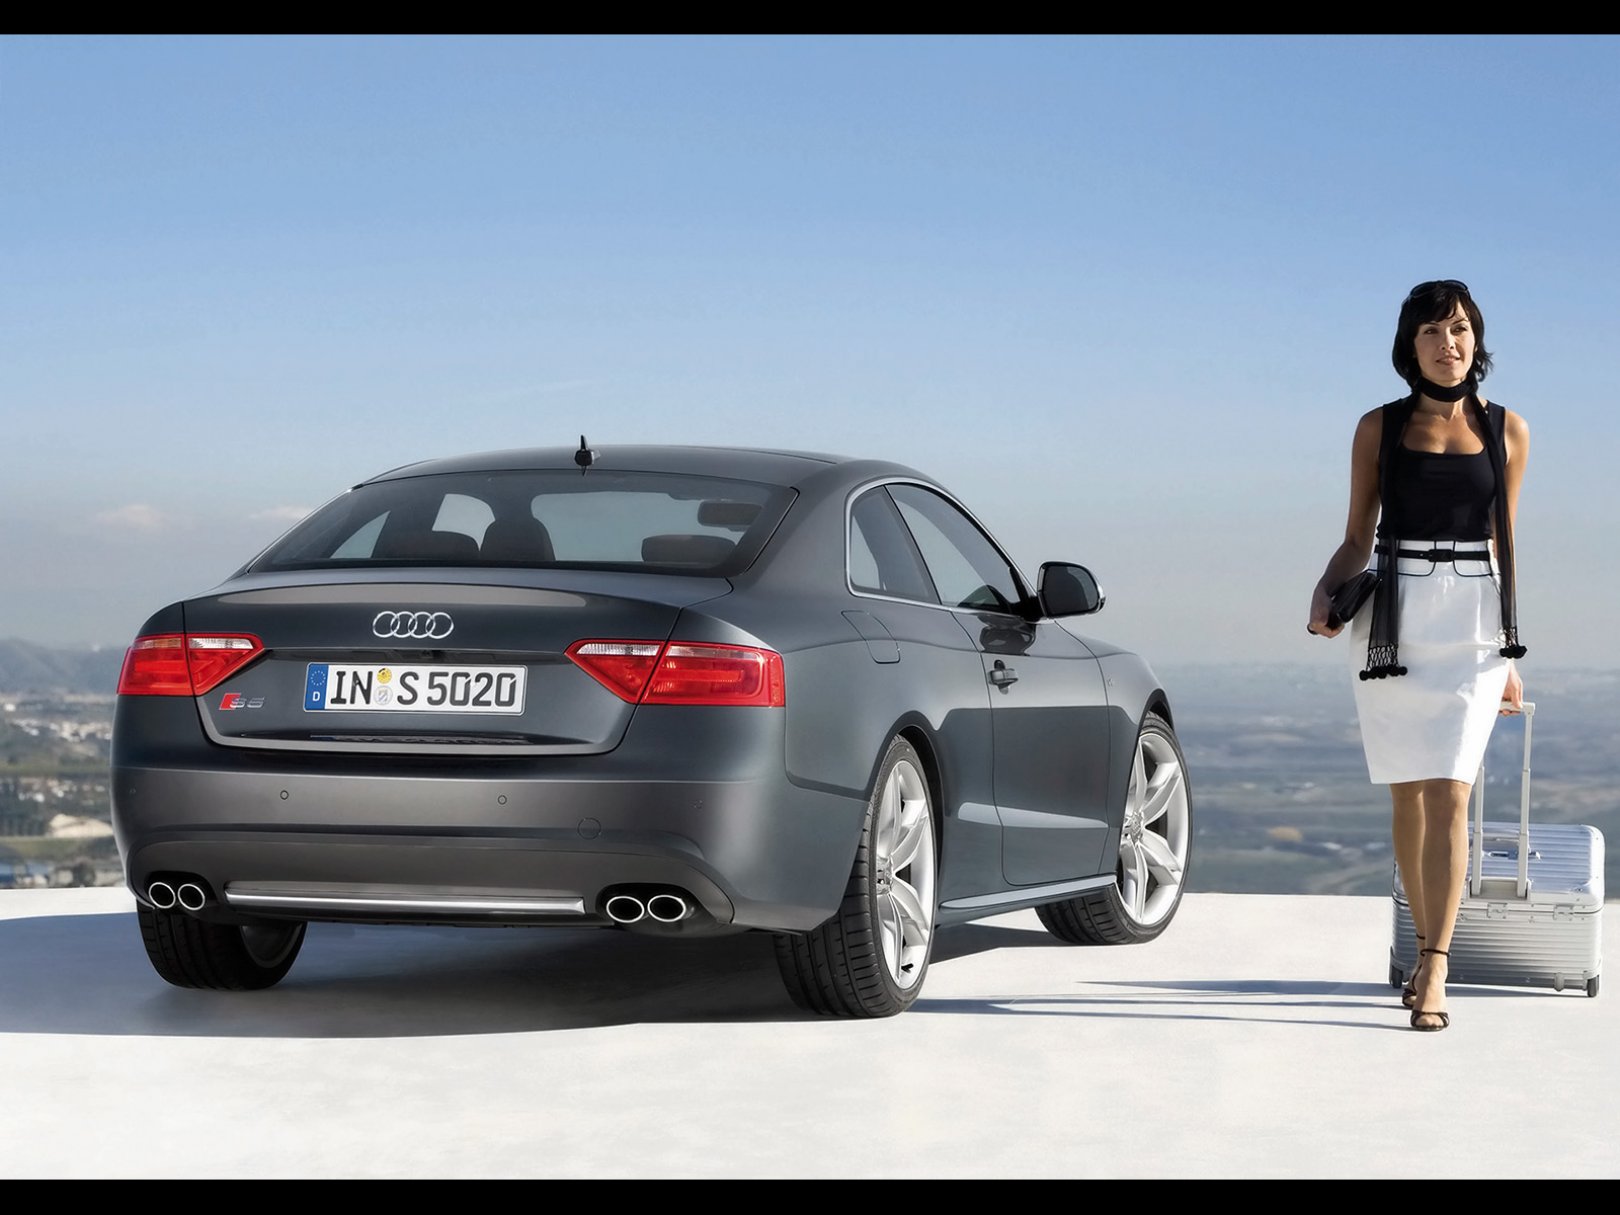 Foto: Audi S5 Rear Angle Woman (2008)